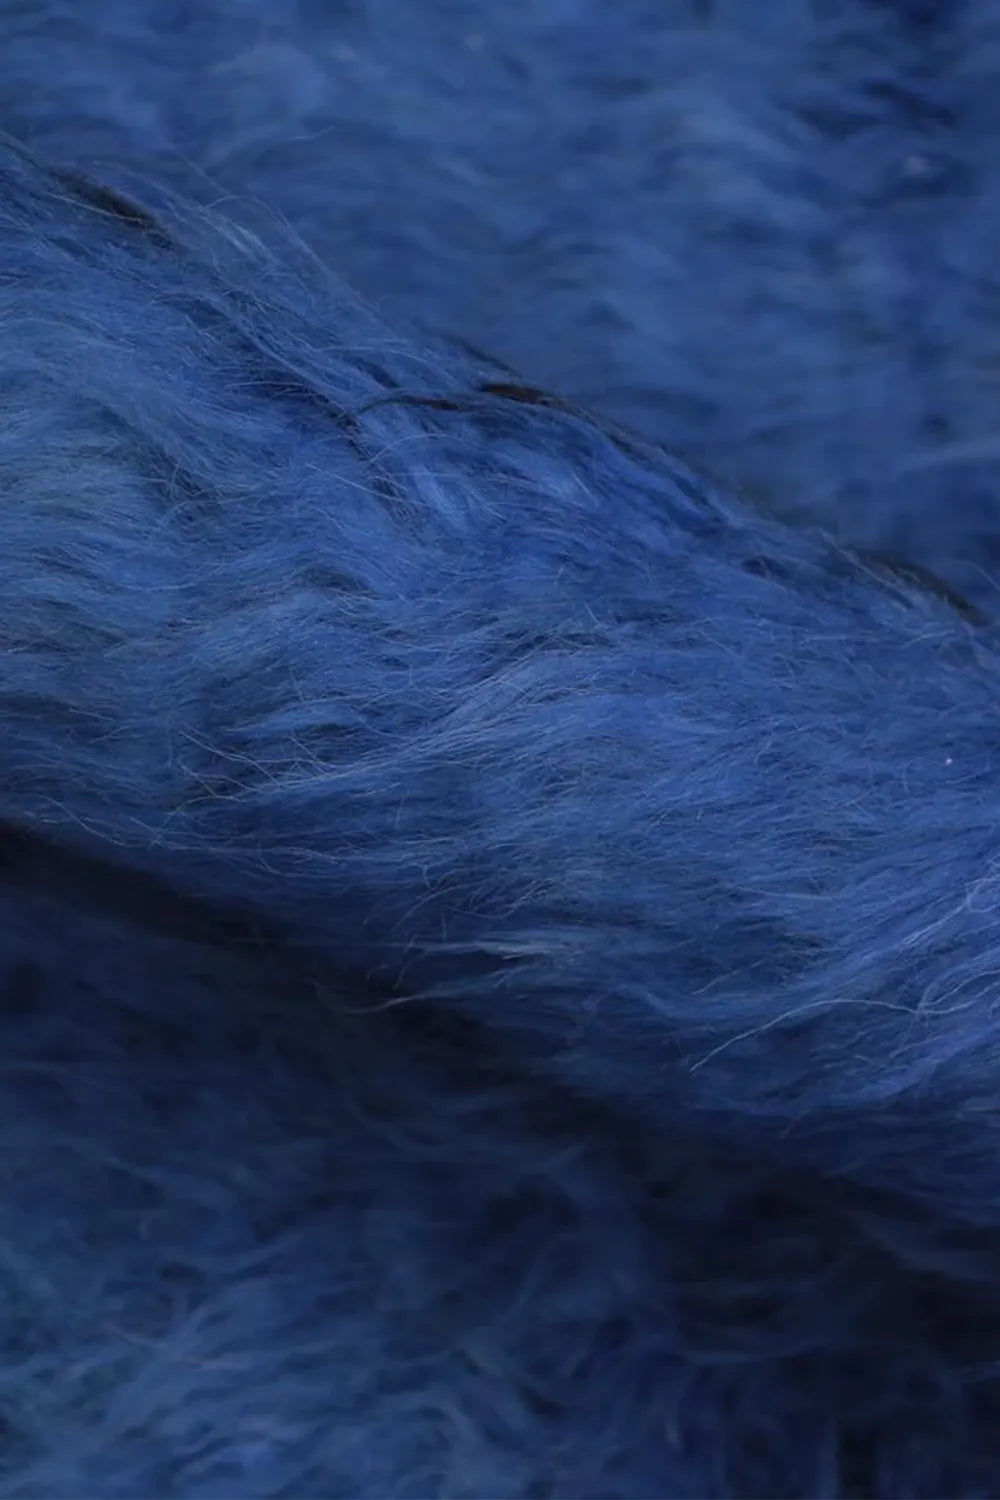 Plush Blue Moroccan Wool Rug in 7x10 Size